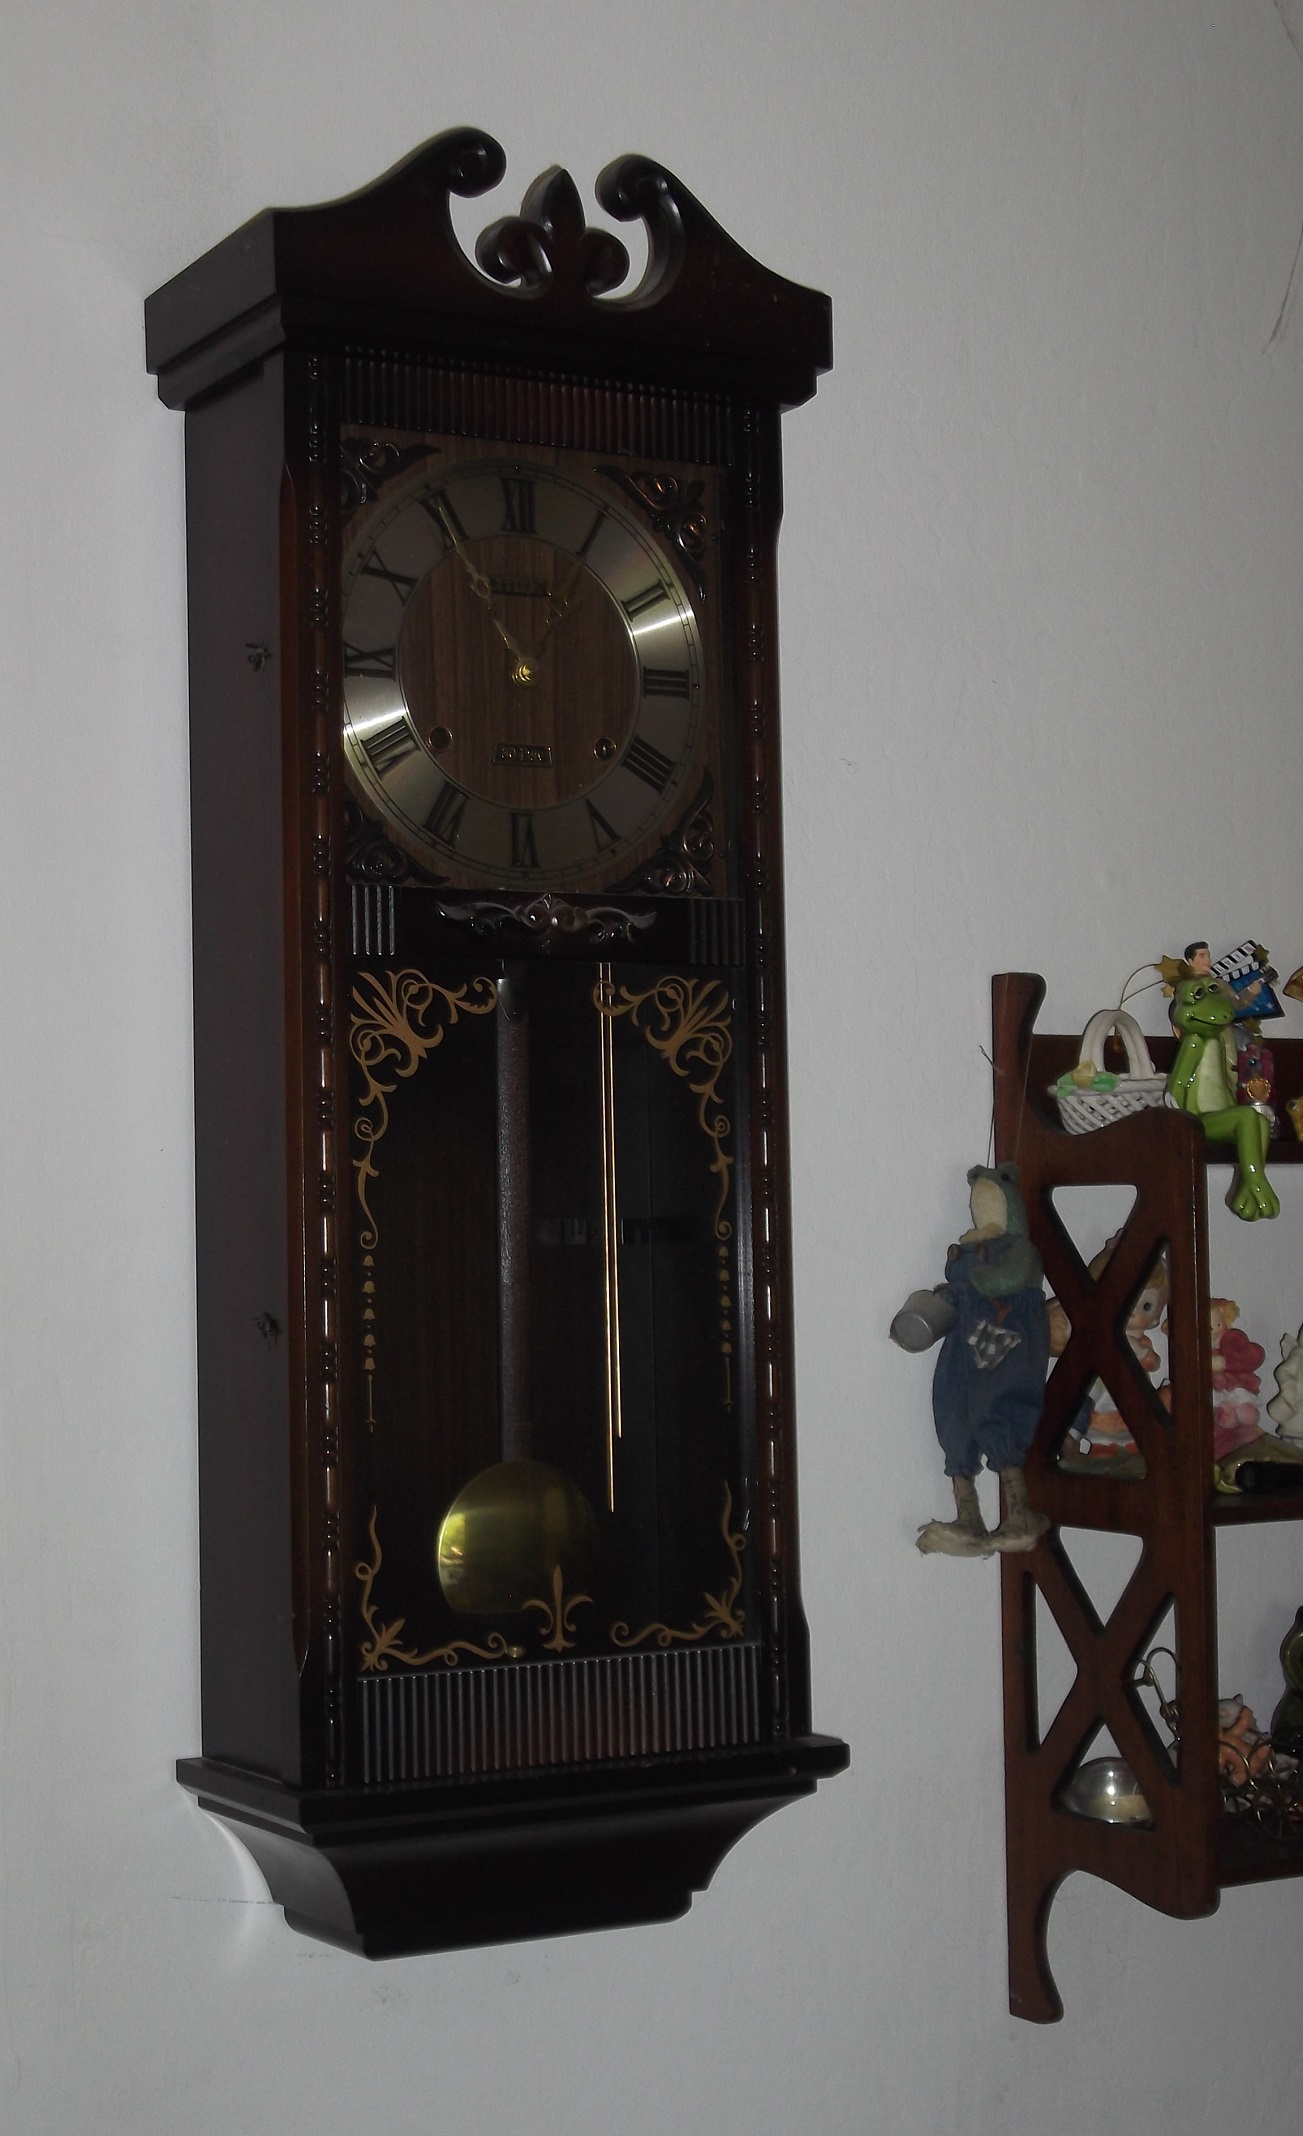 Photo I took of my grandmother's clock